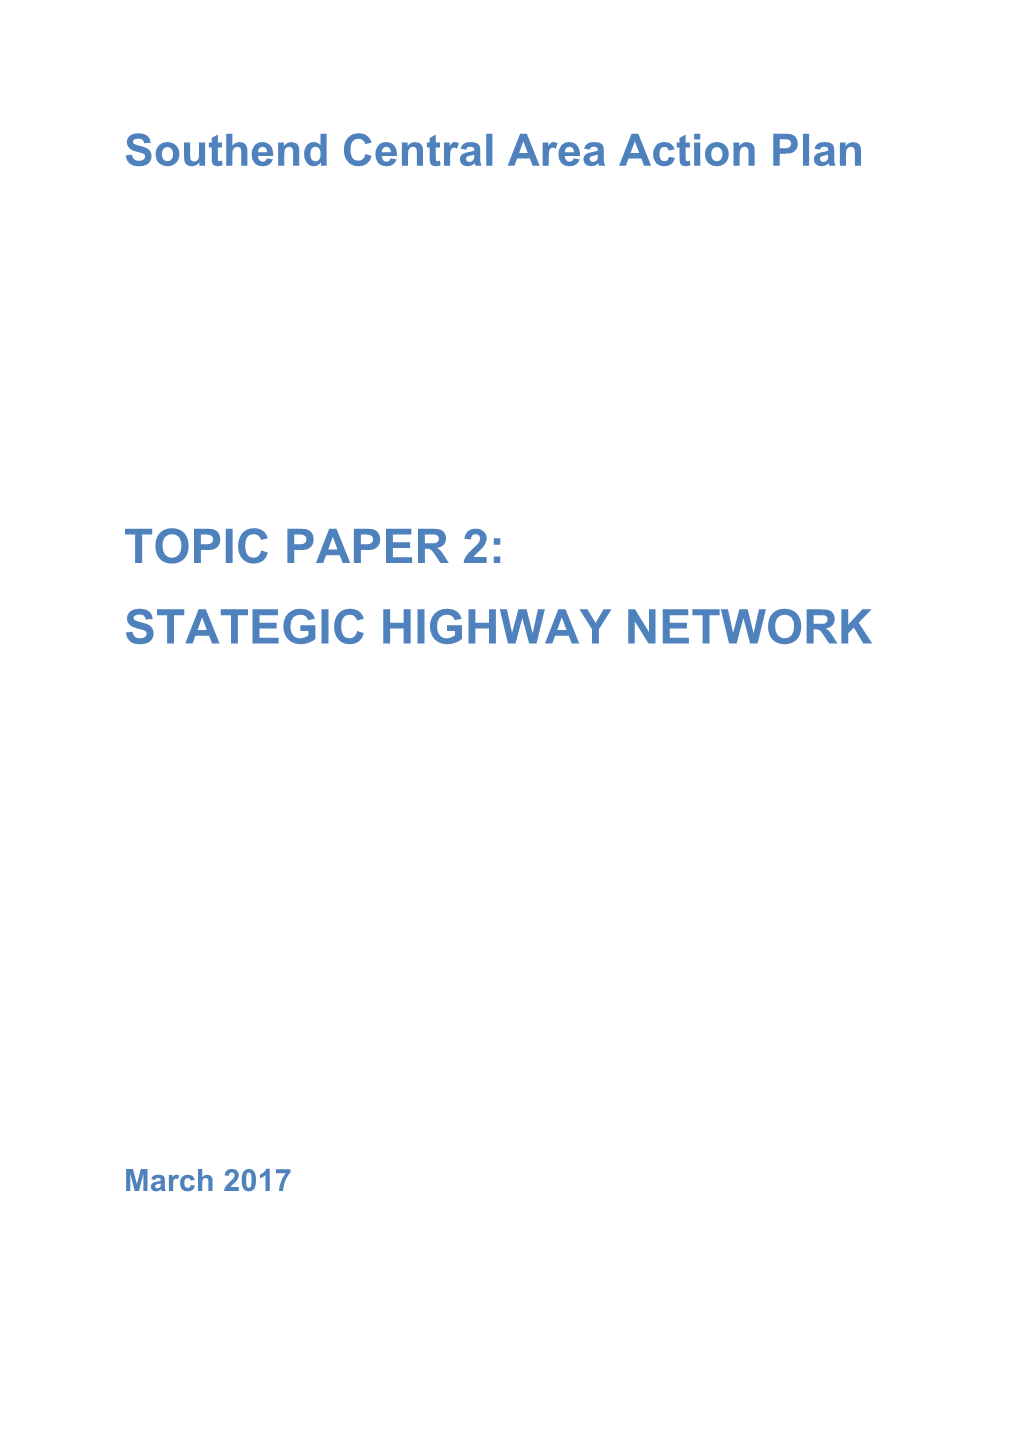 Topic Paper 2: Stategic Highway Network